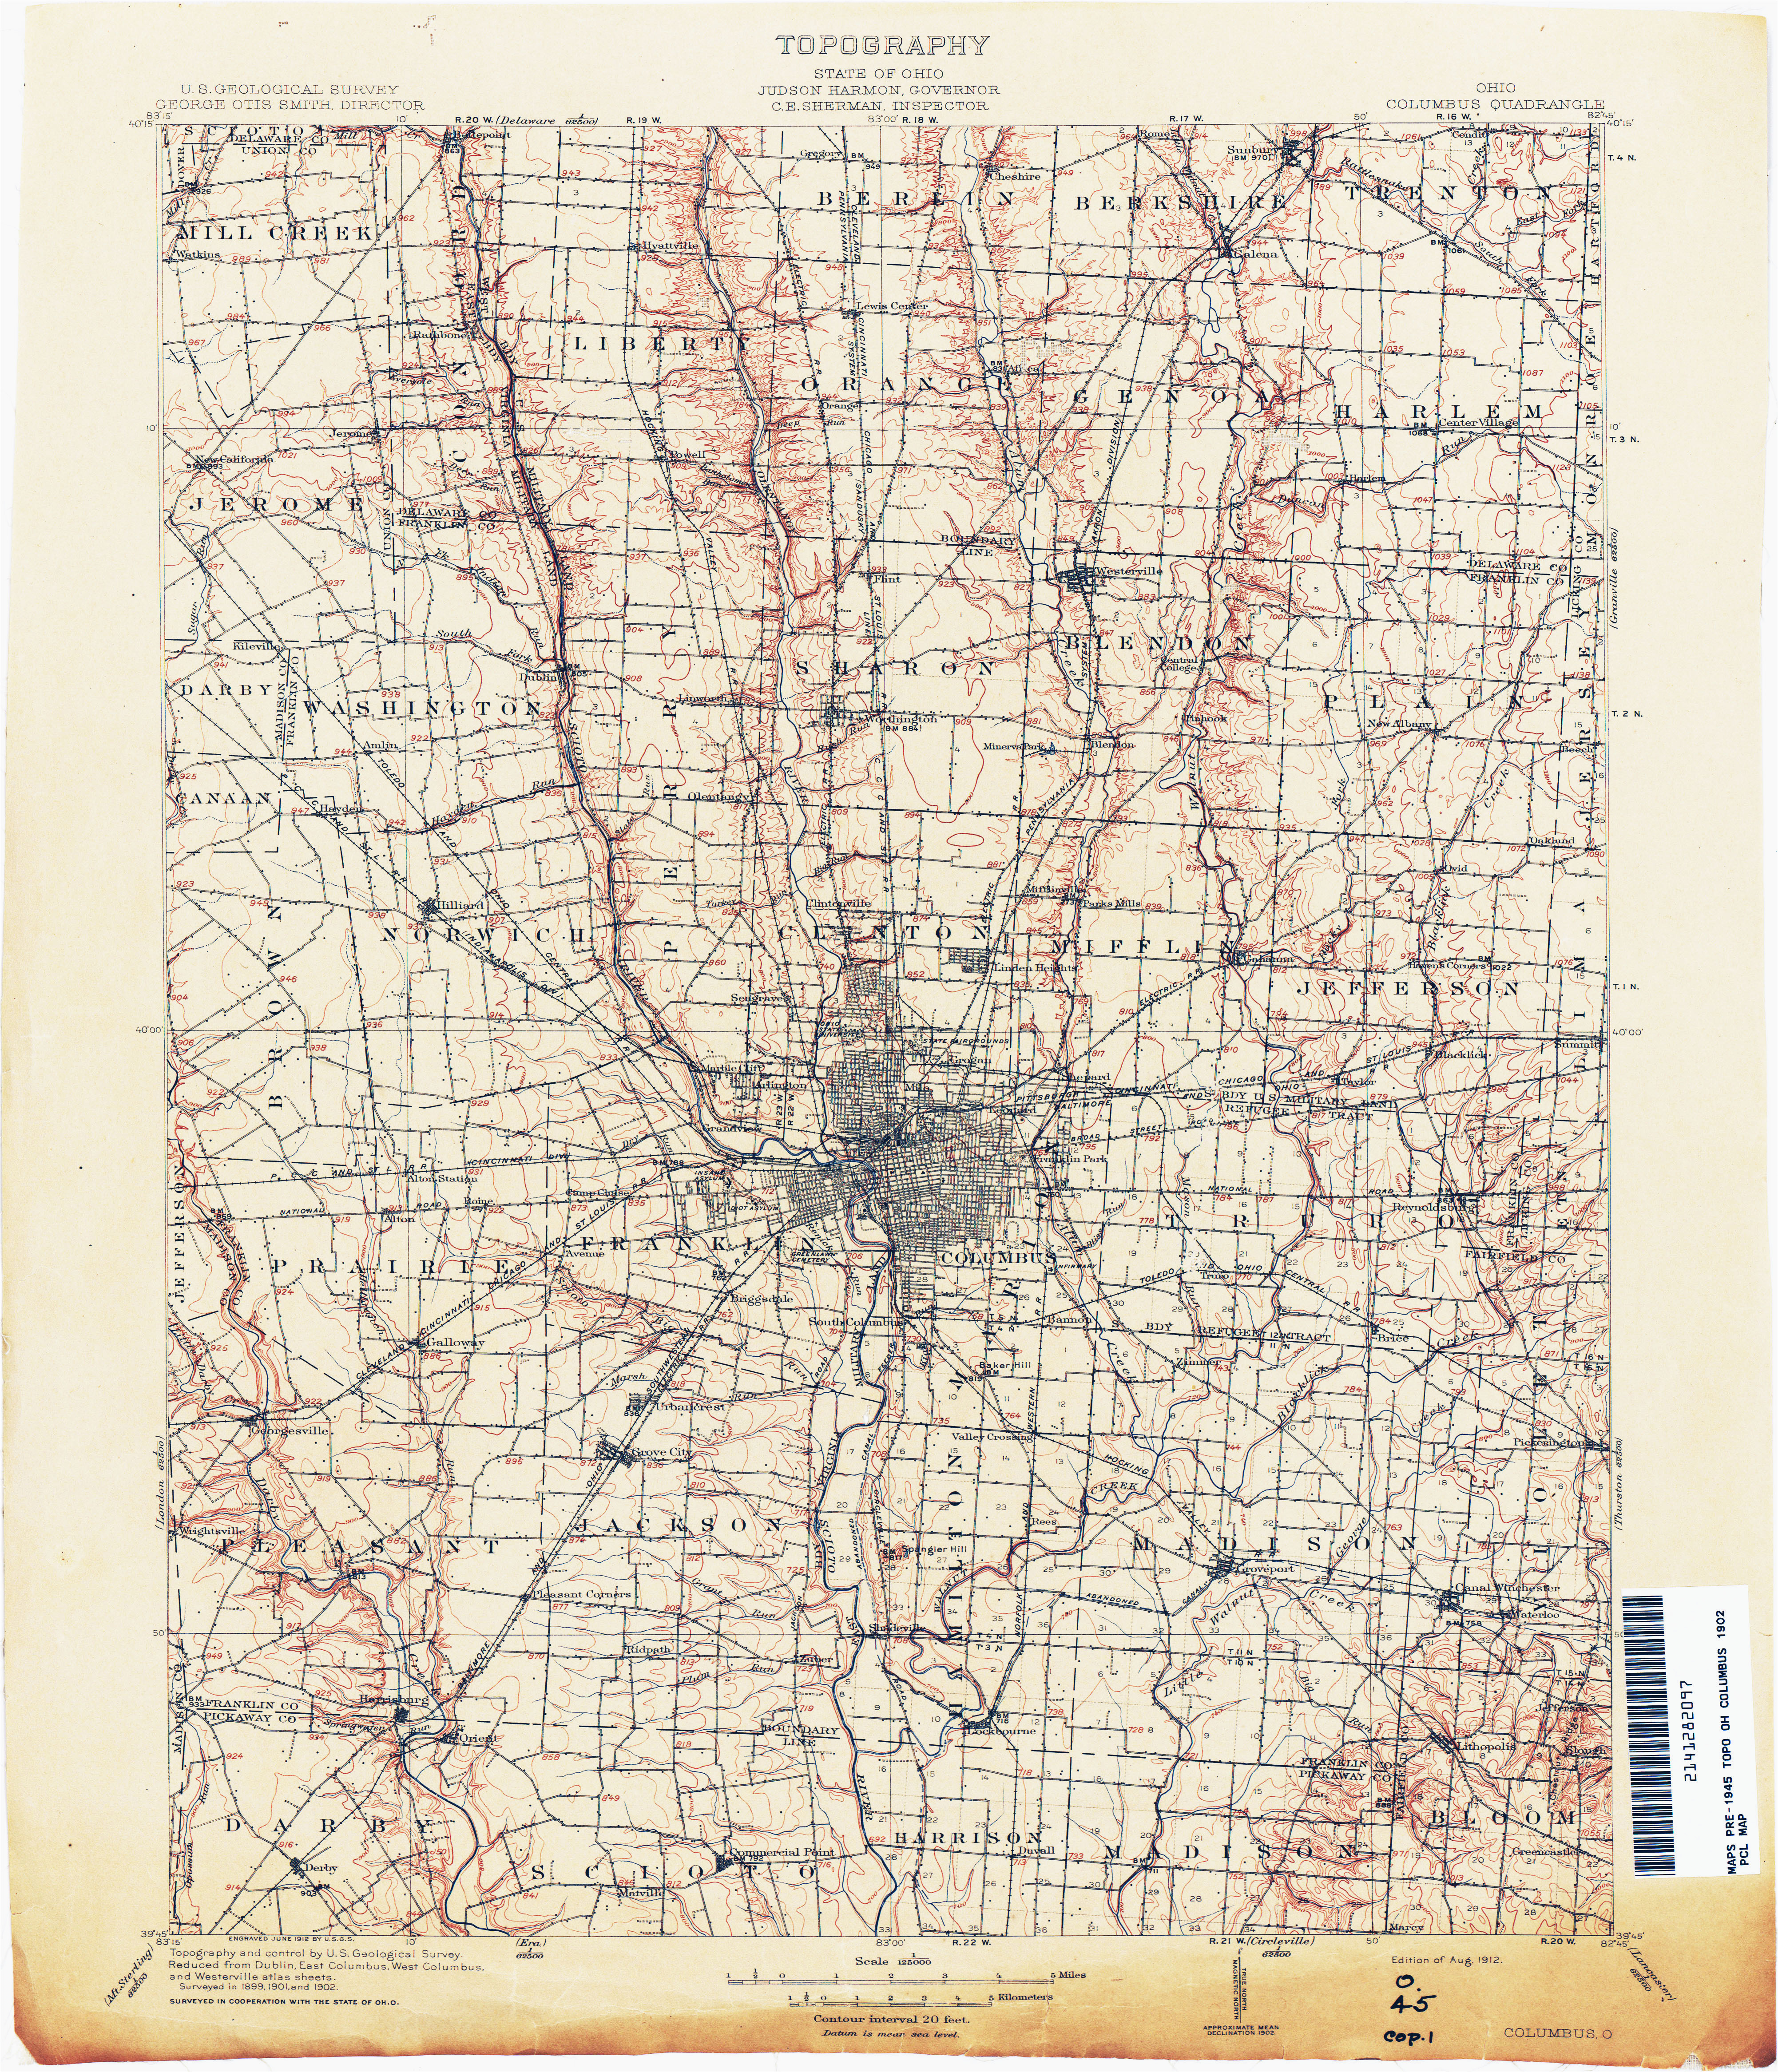 Jefferson County Ohio township Map secretmuseum